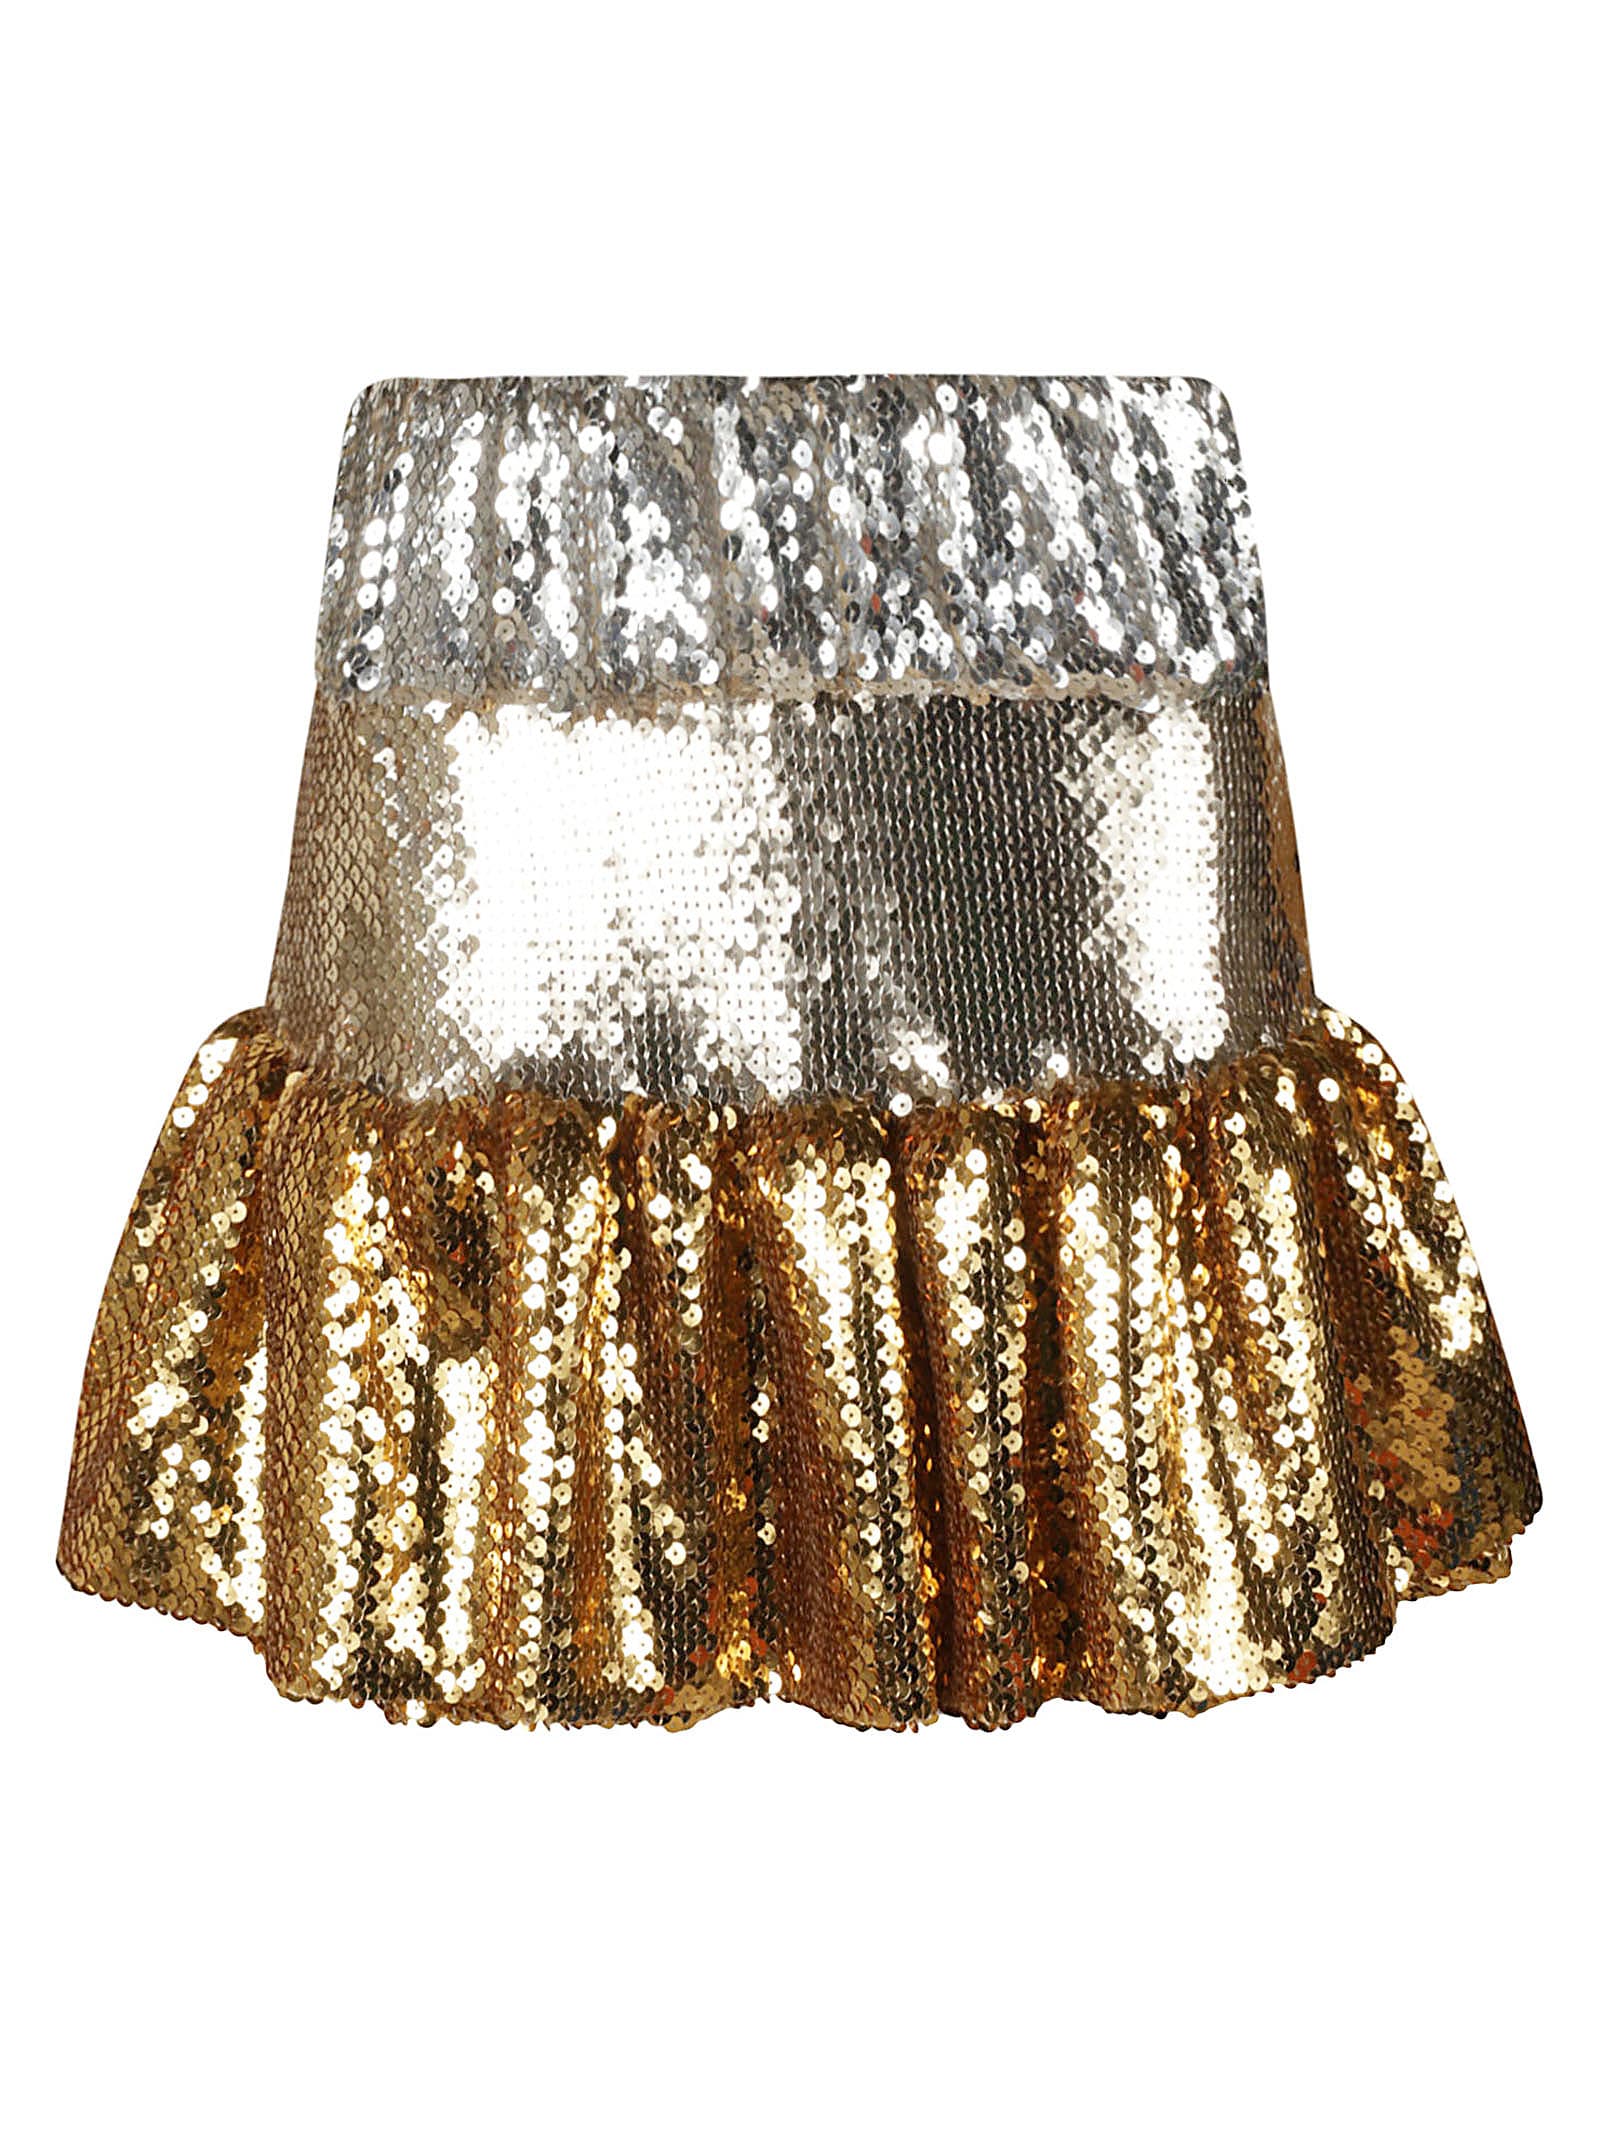 Paco Rabanne All-over Bead Embellished Metallic Short Skirt